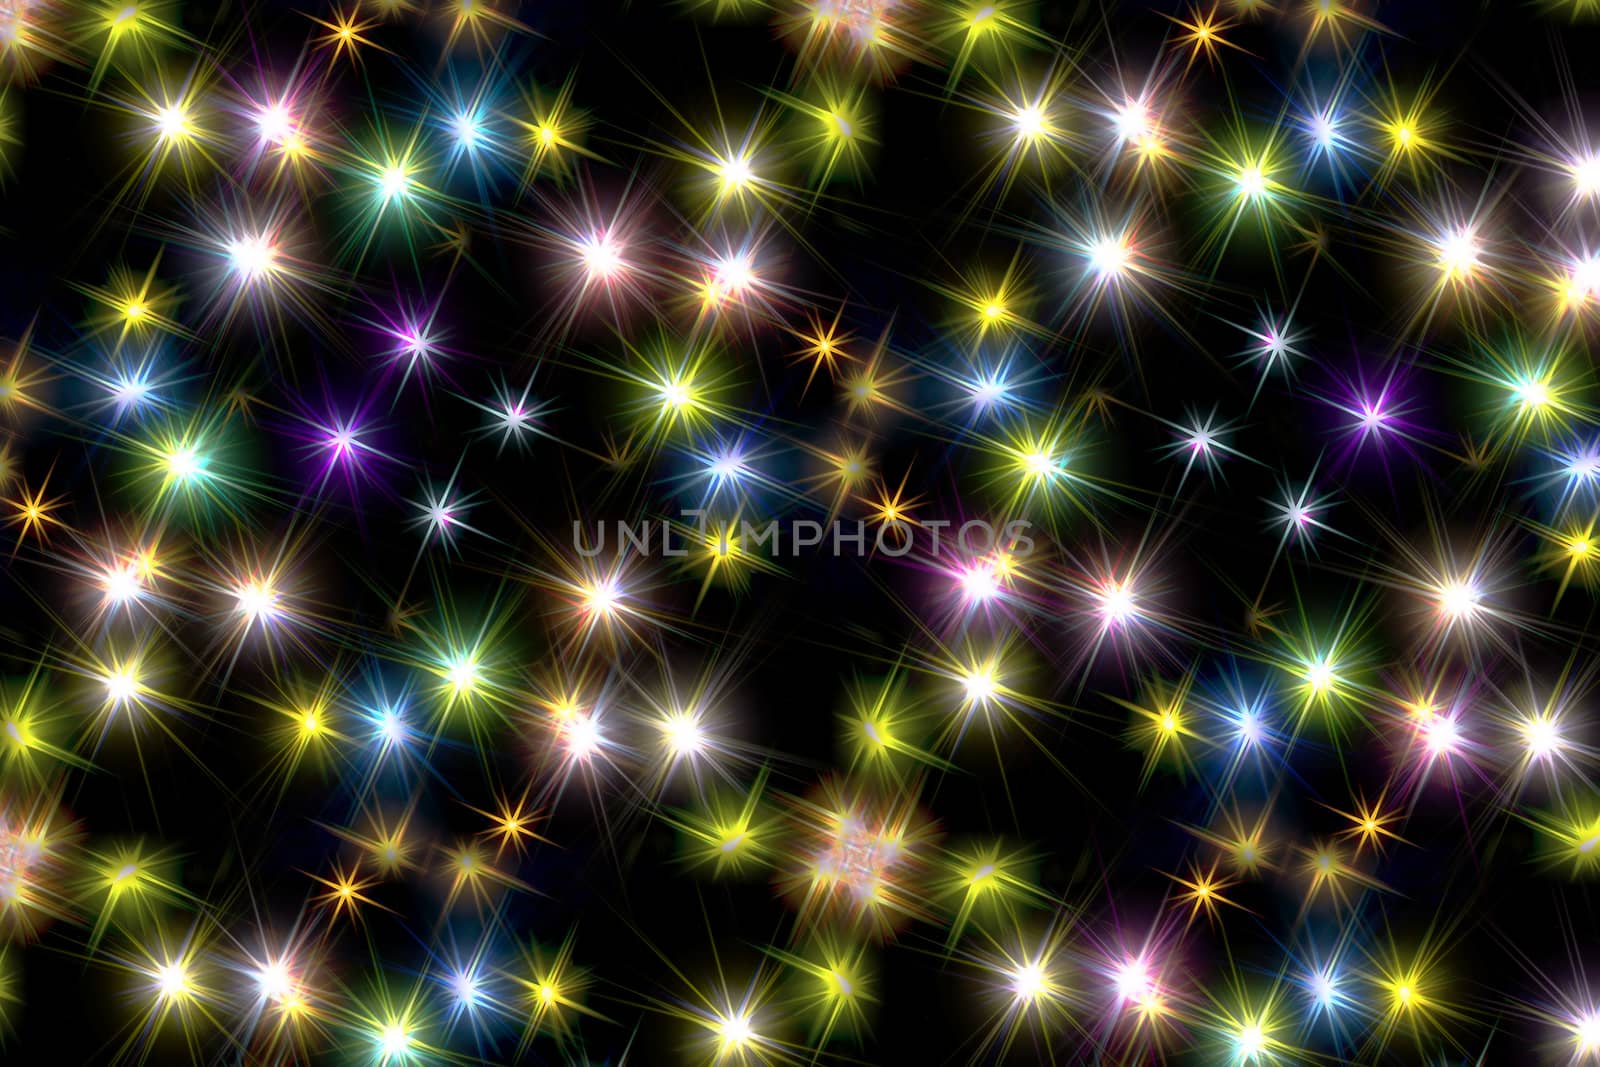 The shining of the stars by Krakatuk